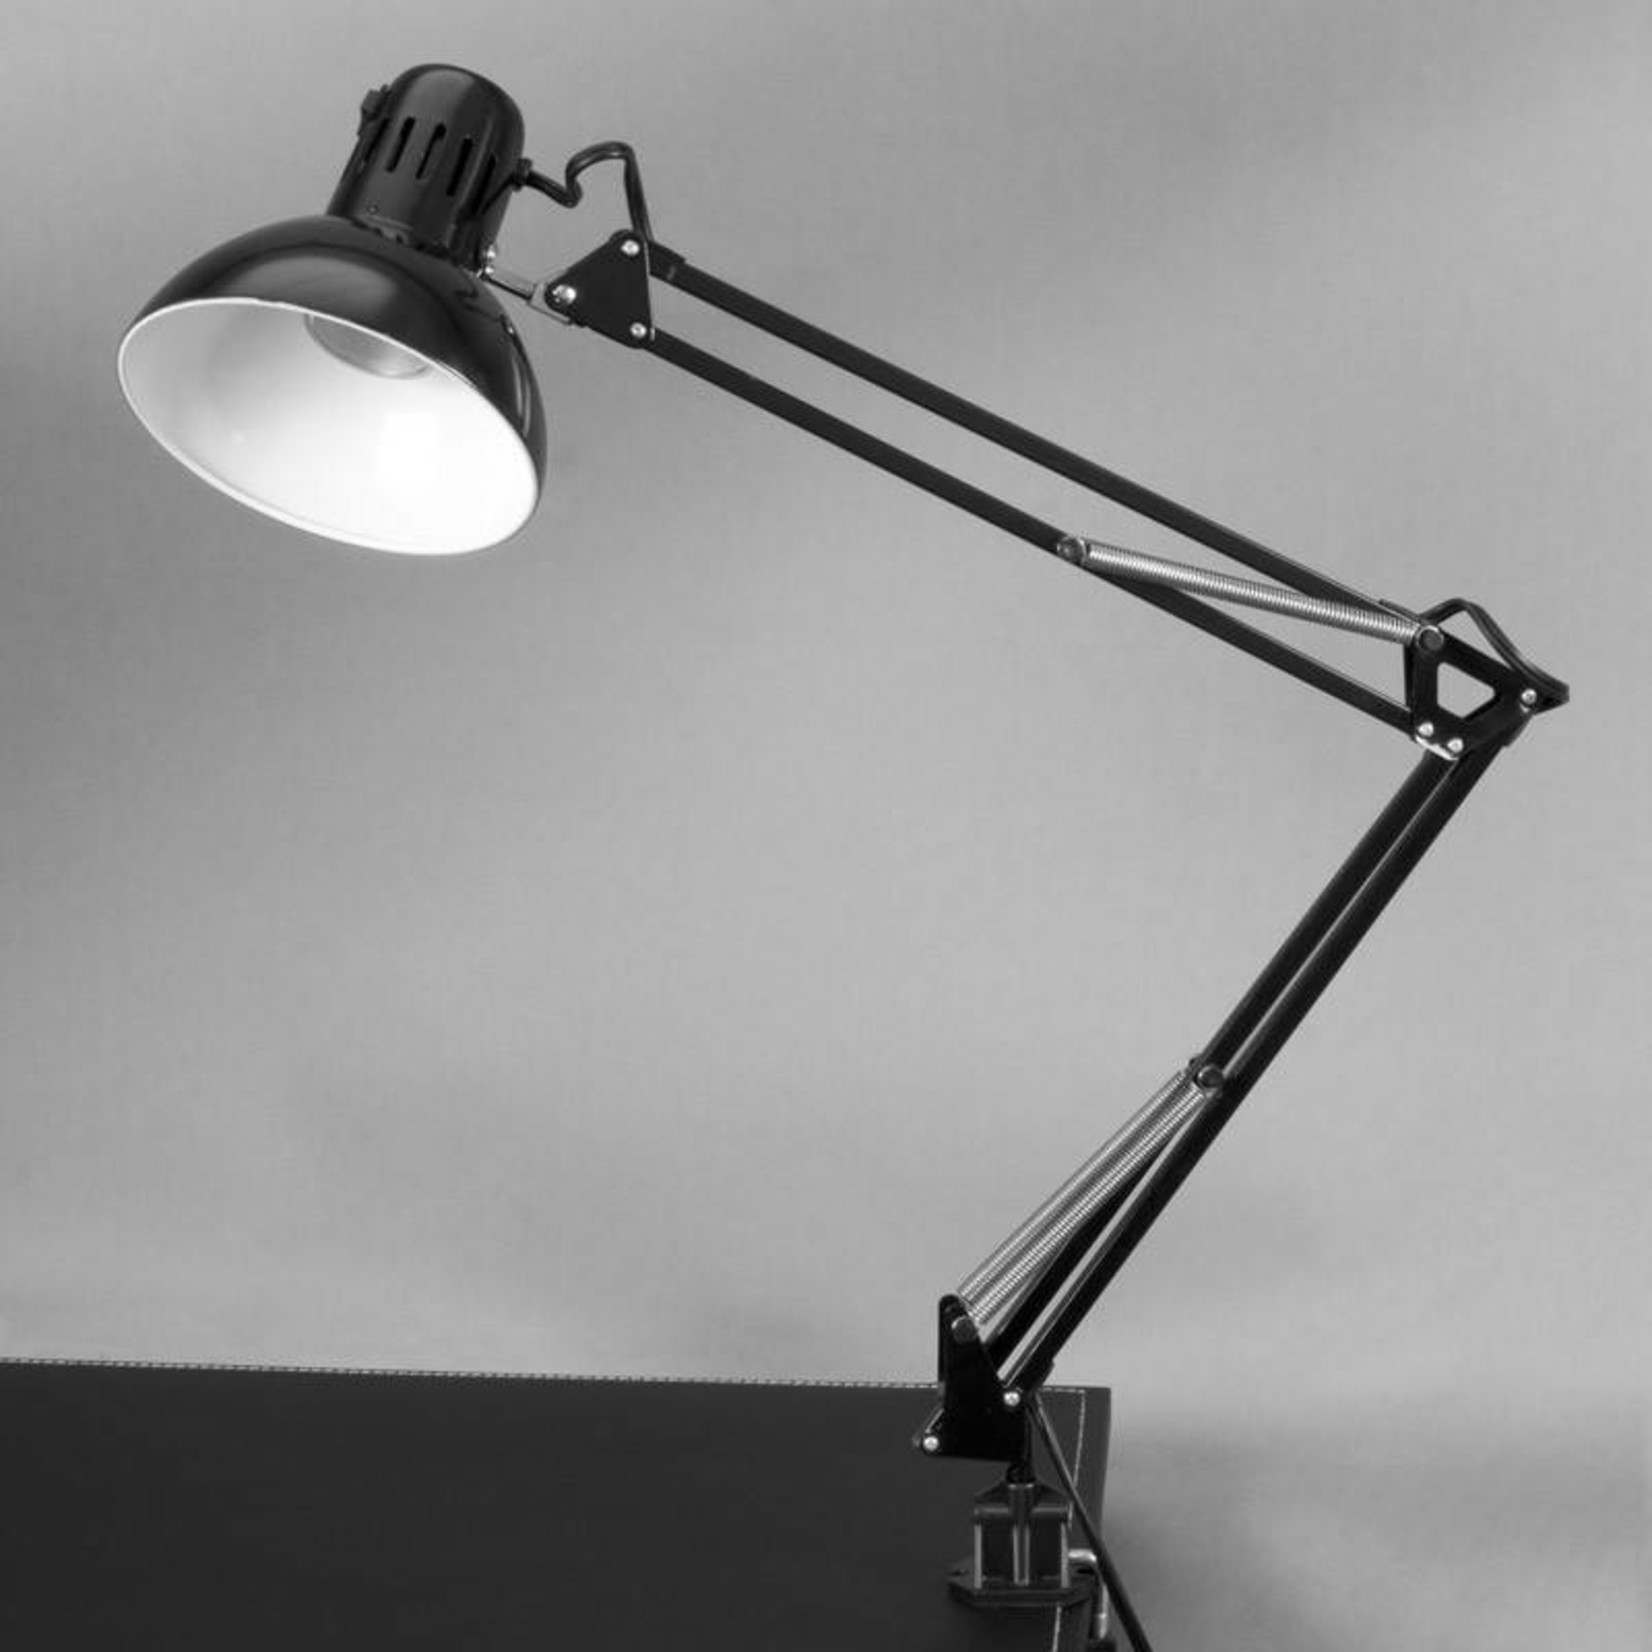 STUDIO DESIGNS STUDIO DESIGNS LED SWING ARM LAMP BLACK